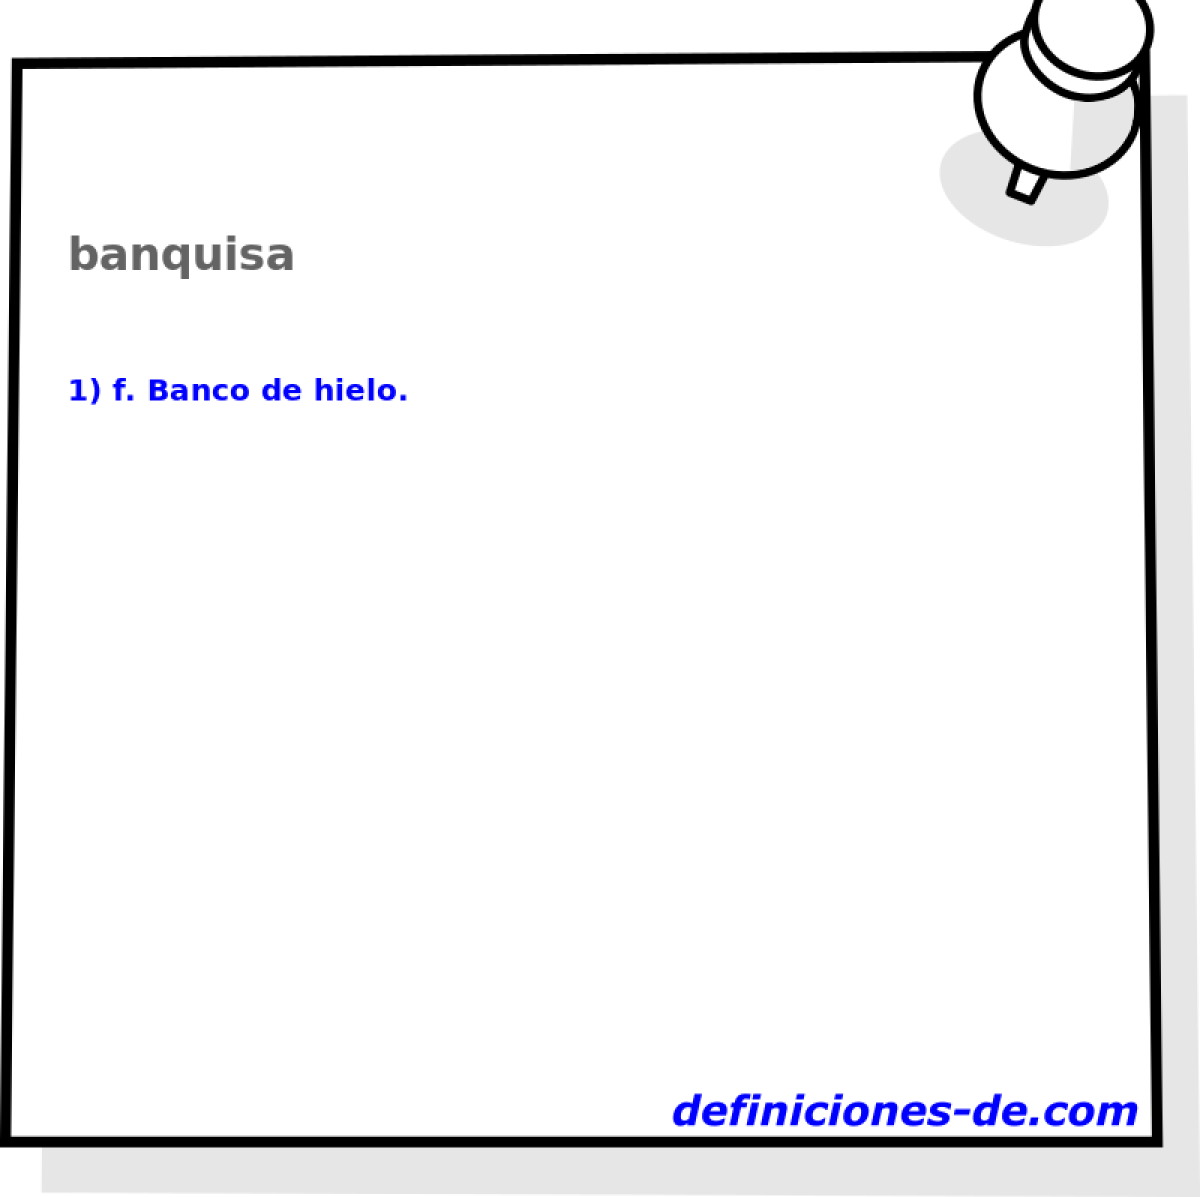 banquisa 